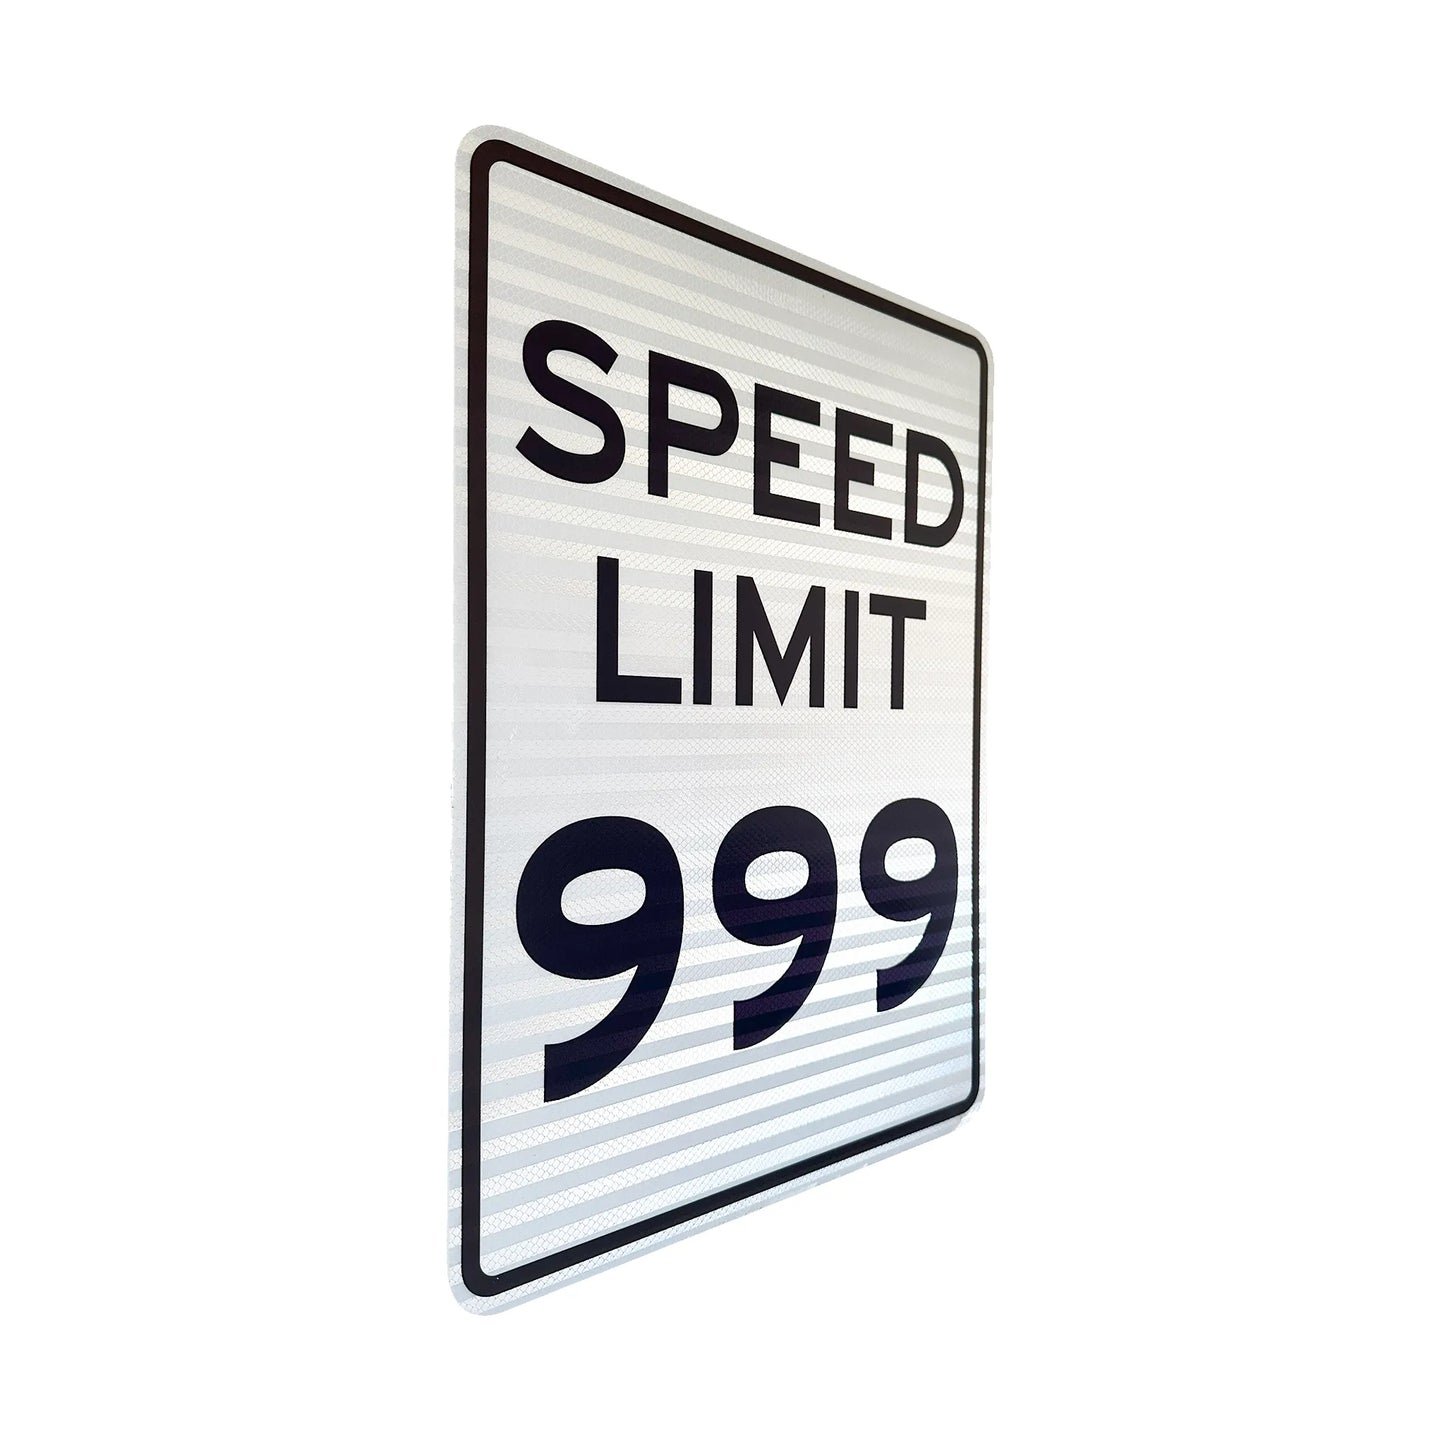 SPEED LIMIT 999 Streetsign